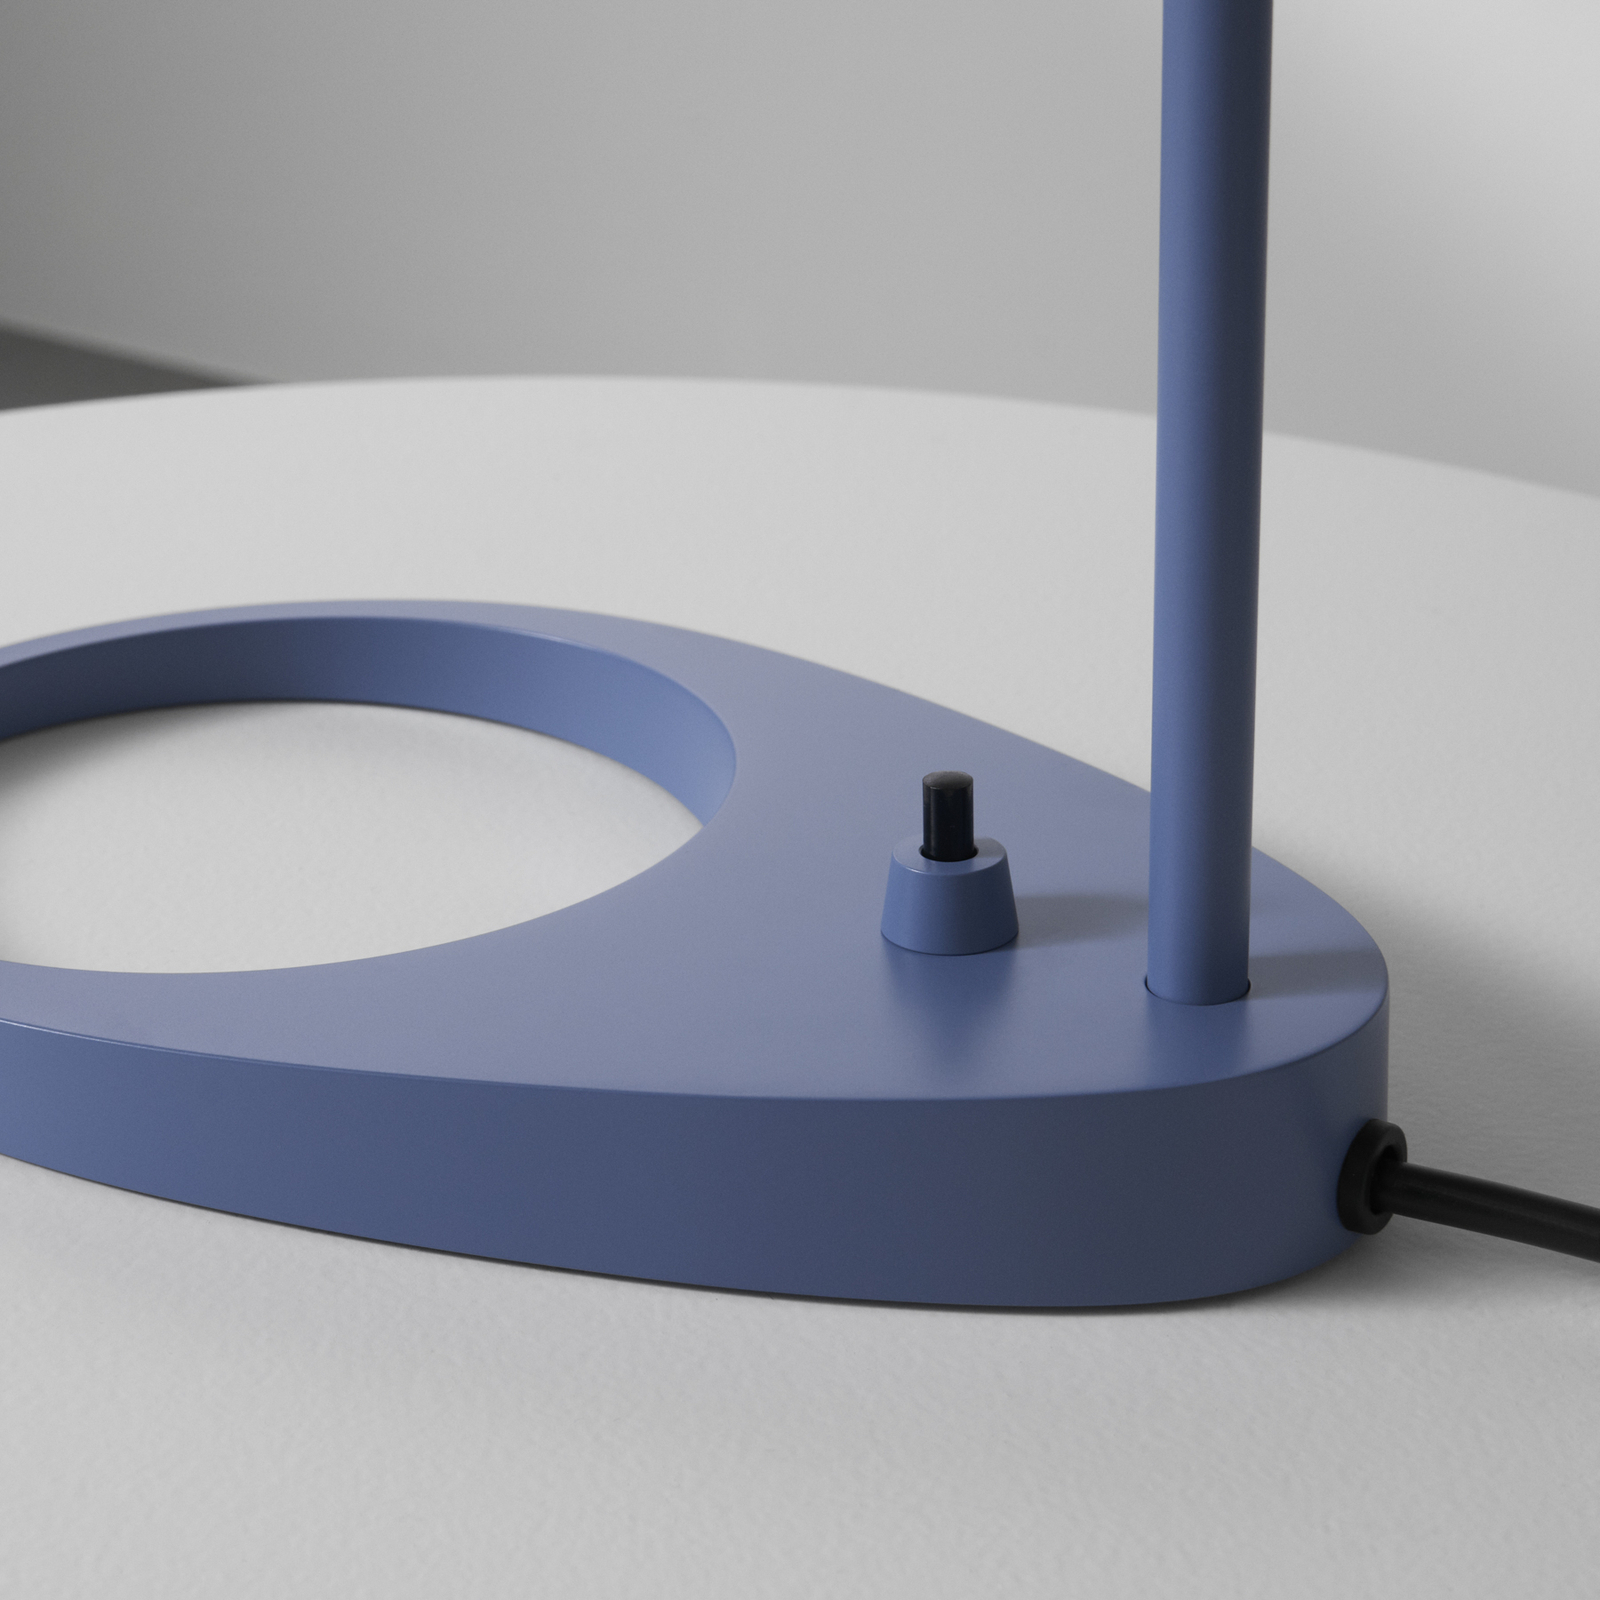 Louis Poulsen AJ designer table lamp blue-grey